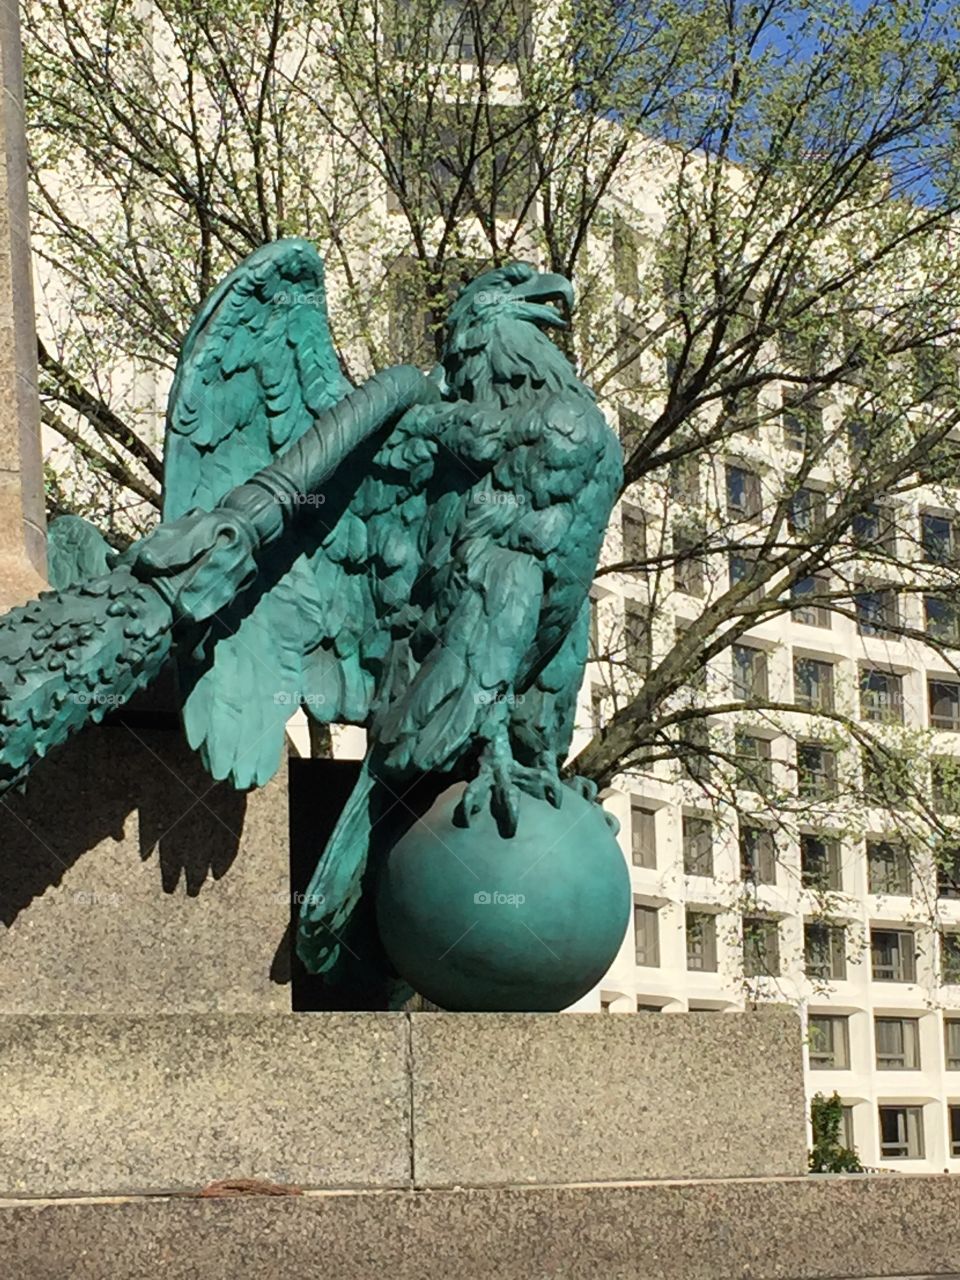 Eagle in Profile. Eagle statue in profile, Connecticut Avenue, Washington, D.C. 